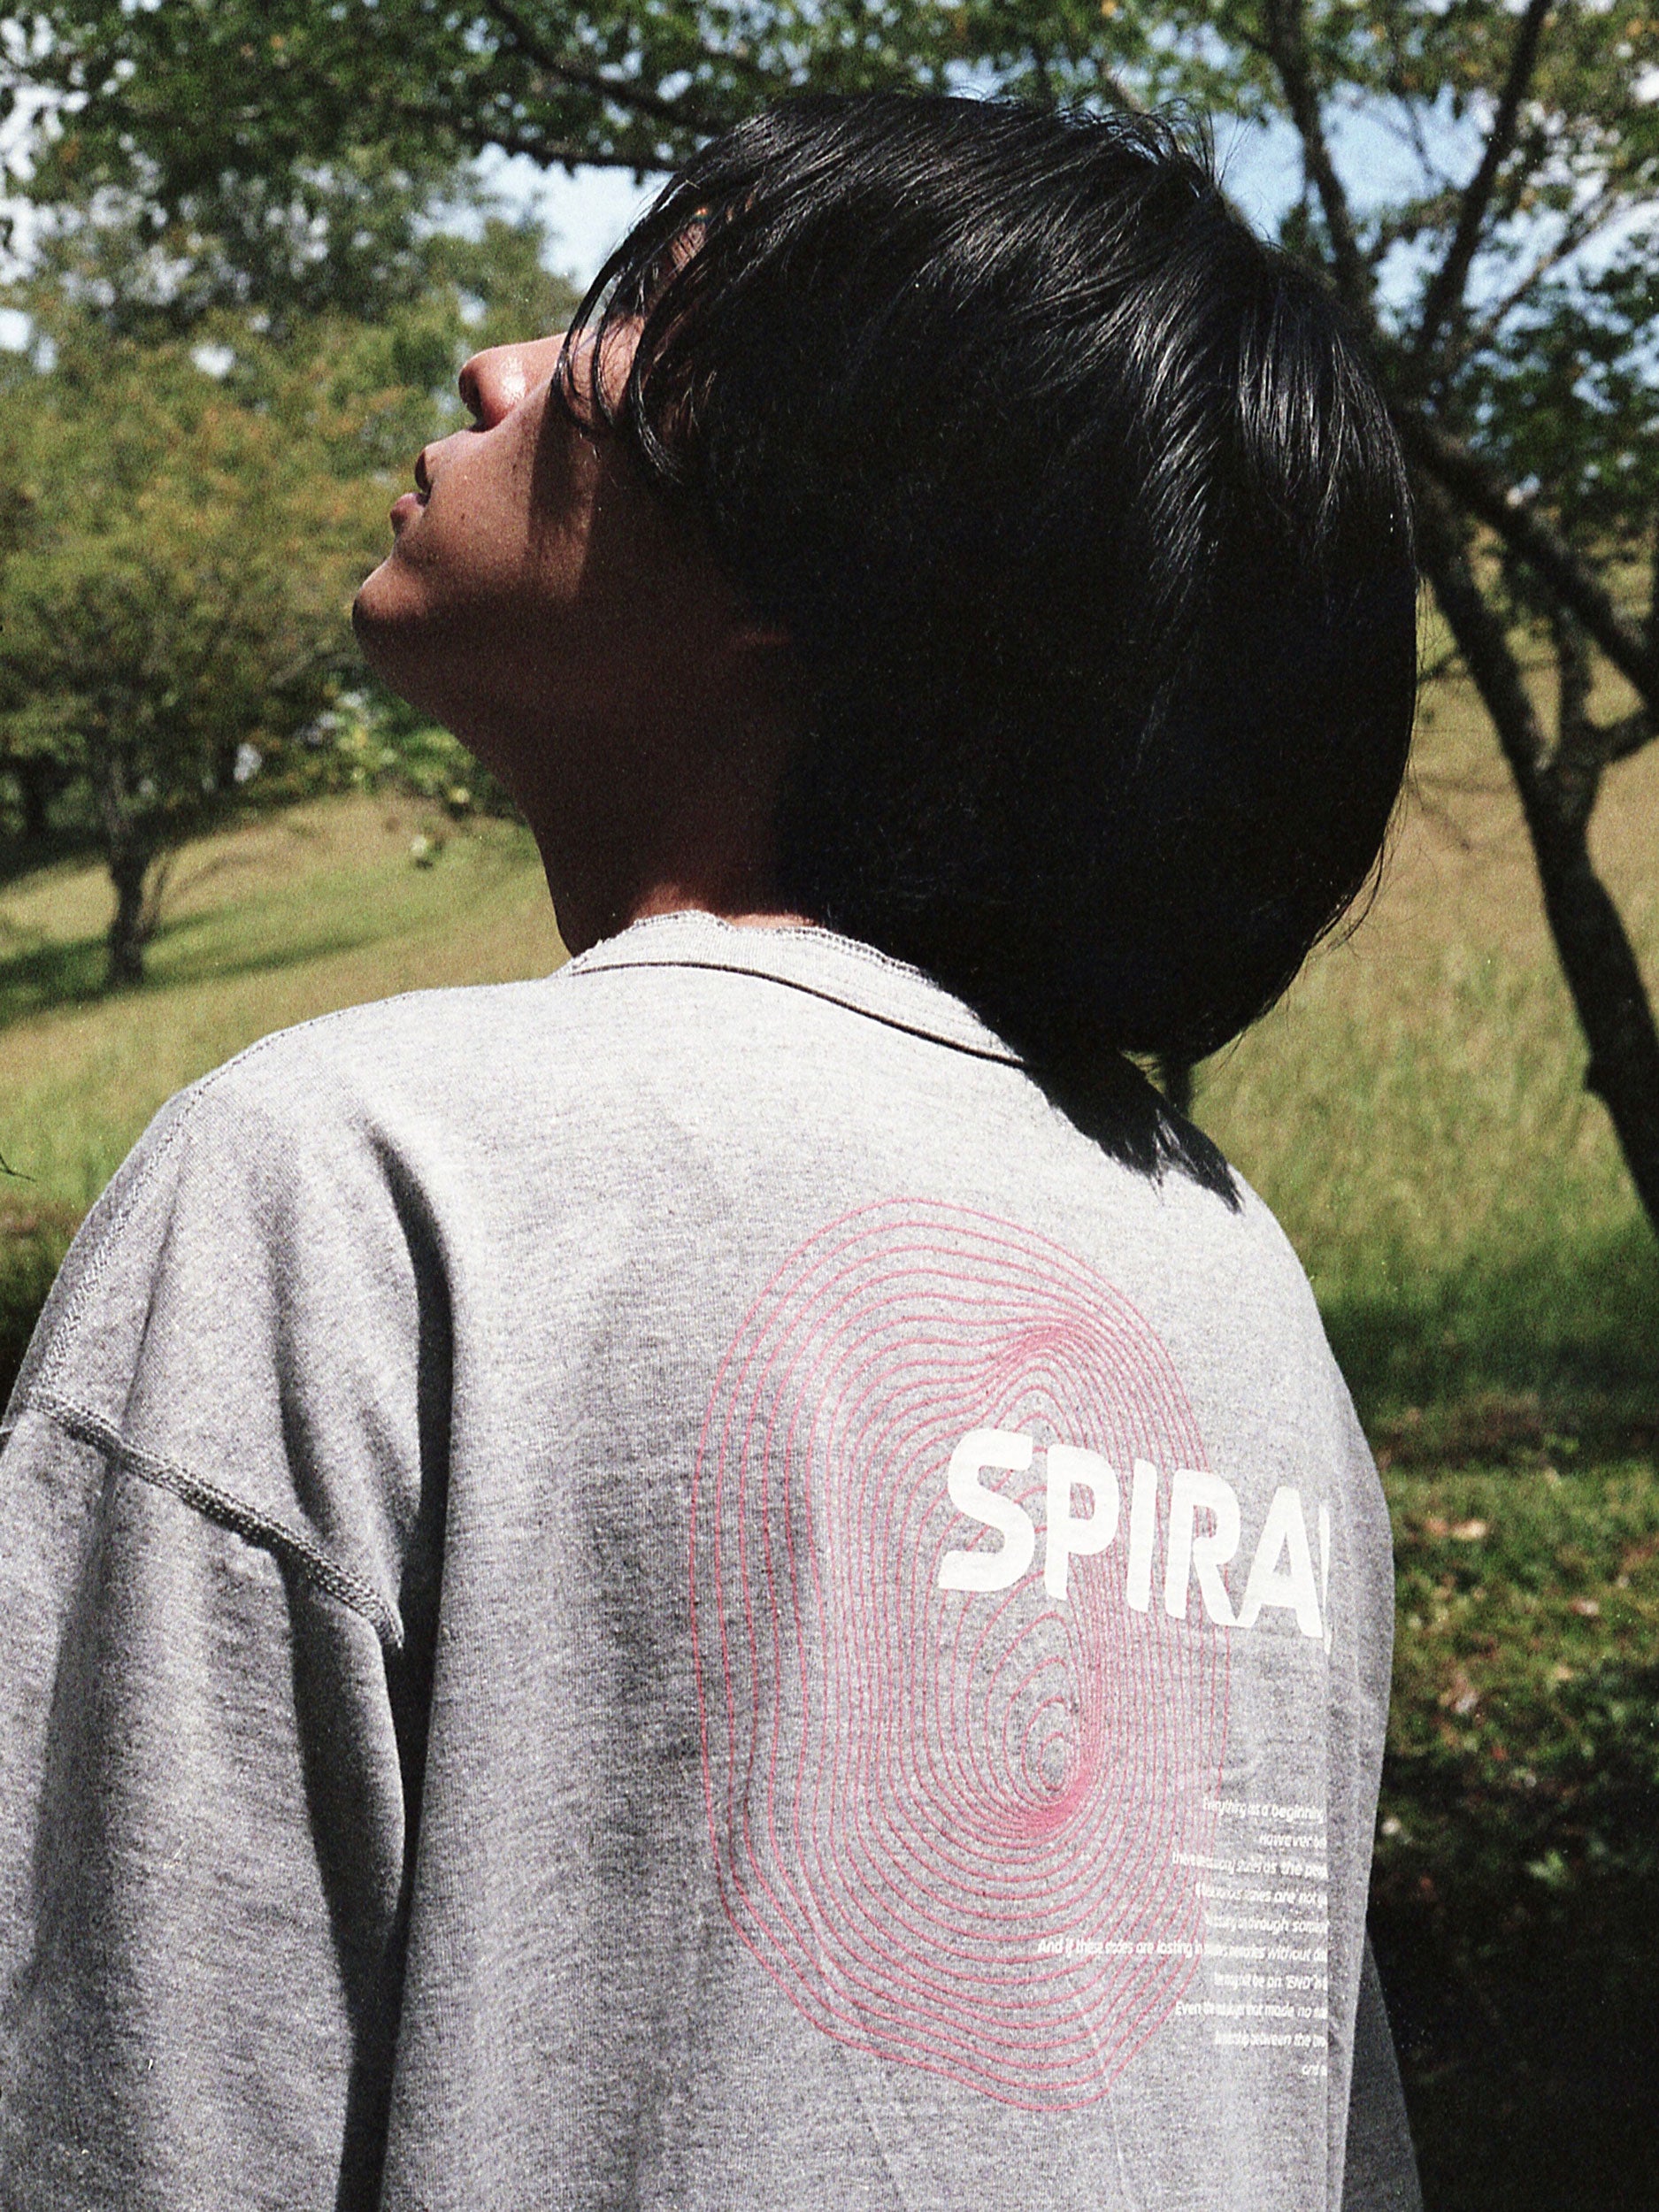 Spiral Big Tshirt/NAVY